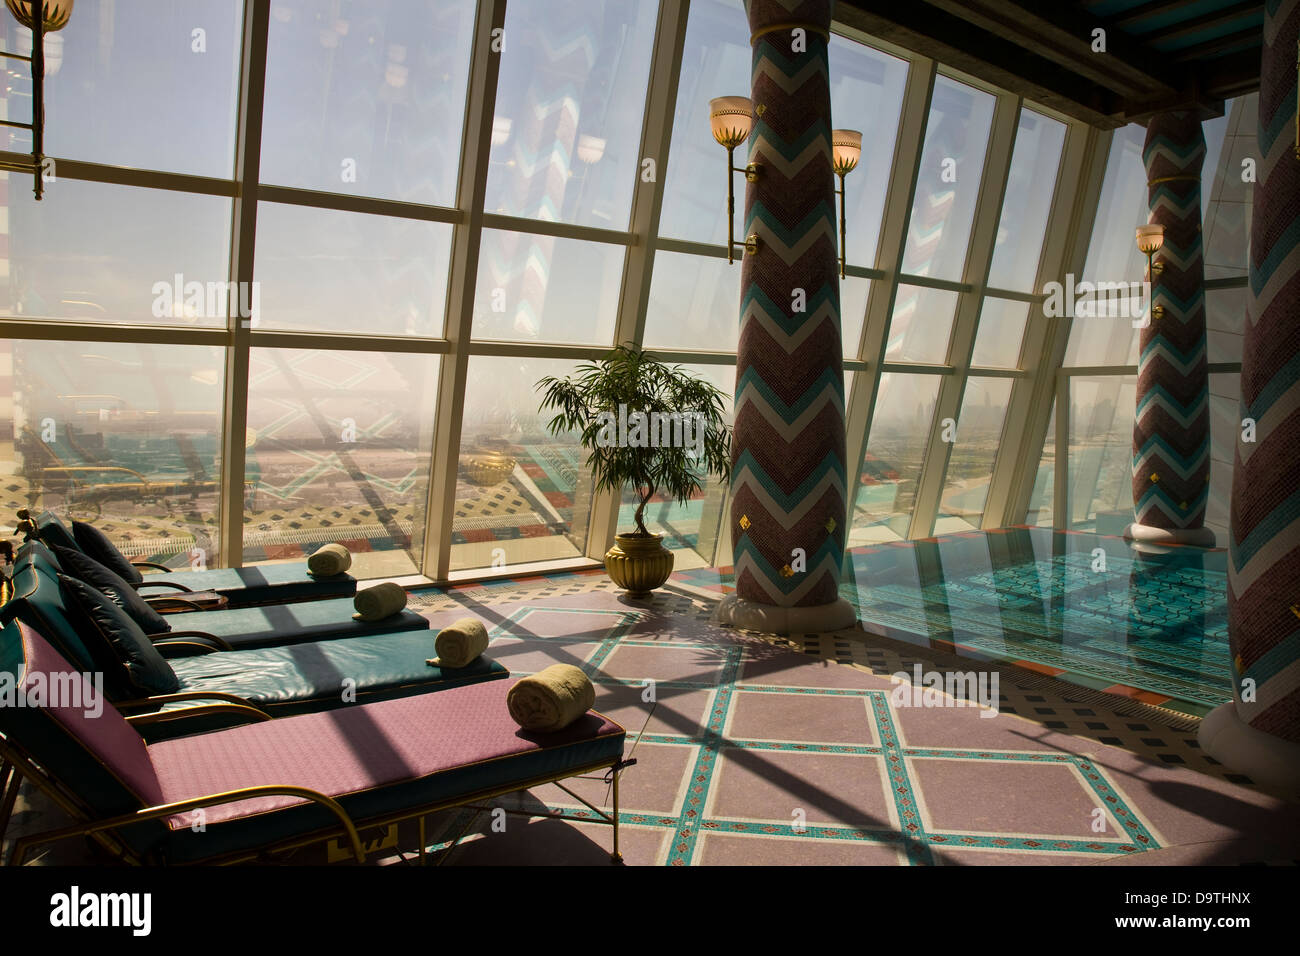 Indoor infinity pool at the ladies' spa, Burj al-Arab hotel in Dubai, U.A.E. Stock Photo